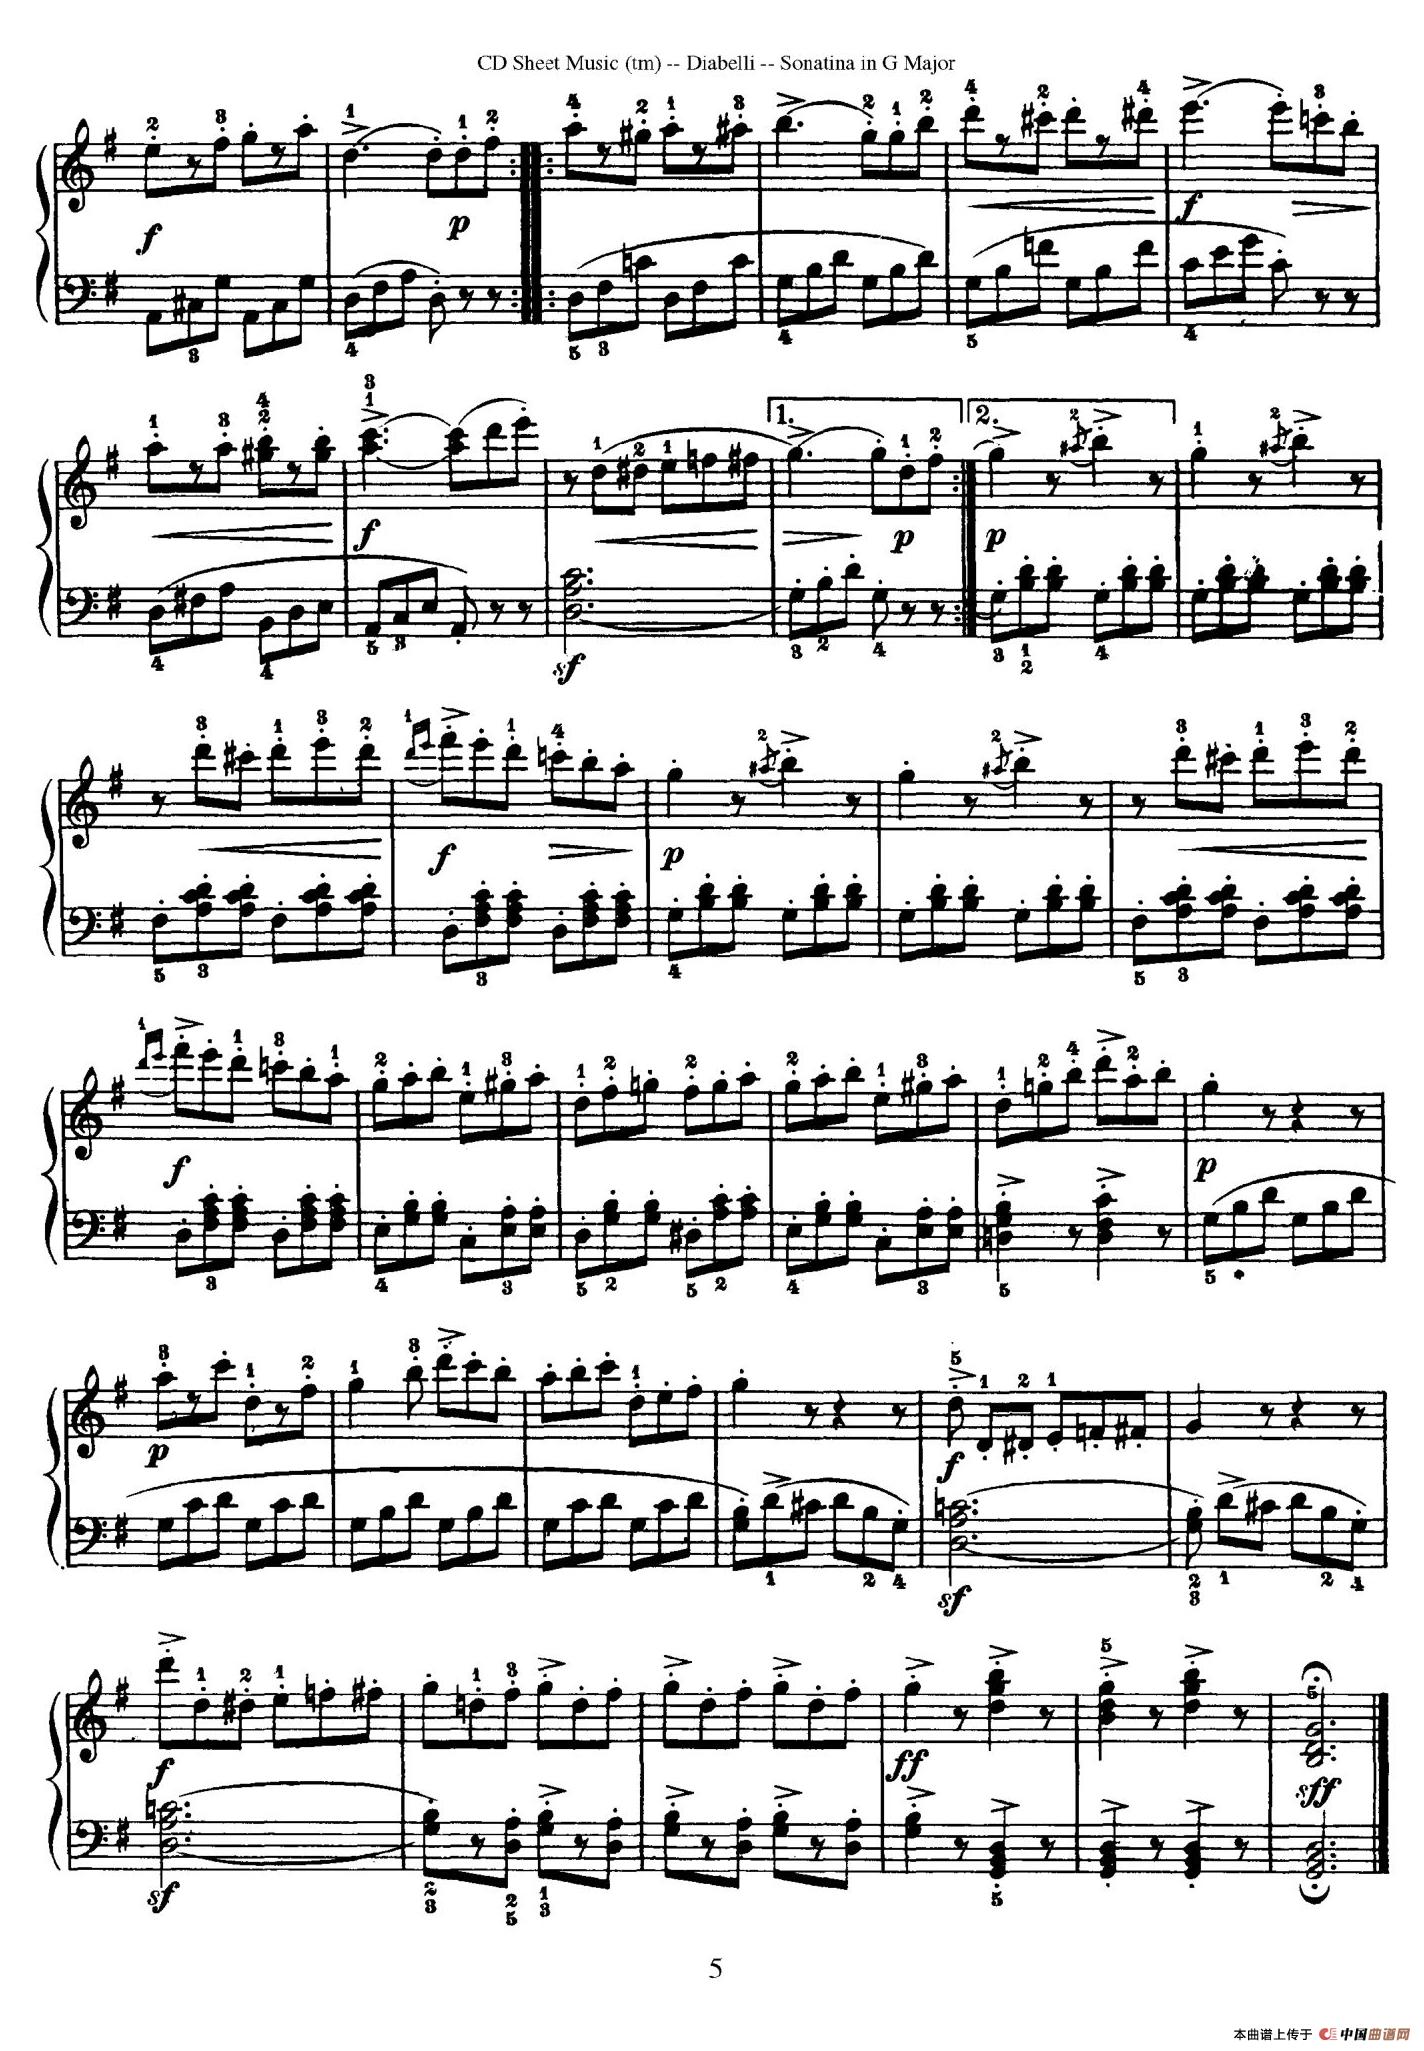 7 Piano Sonatinas Op.168（7首钢琴小奏鸣曲 No.6）